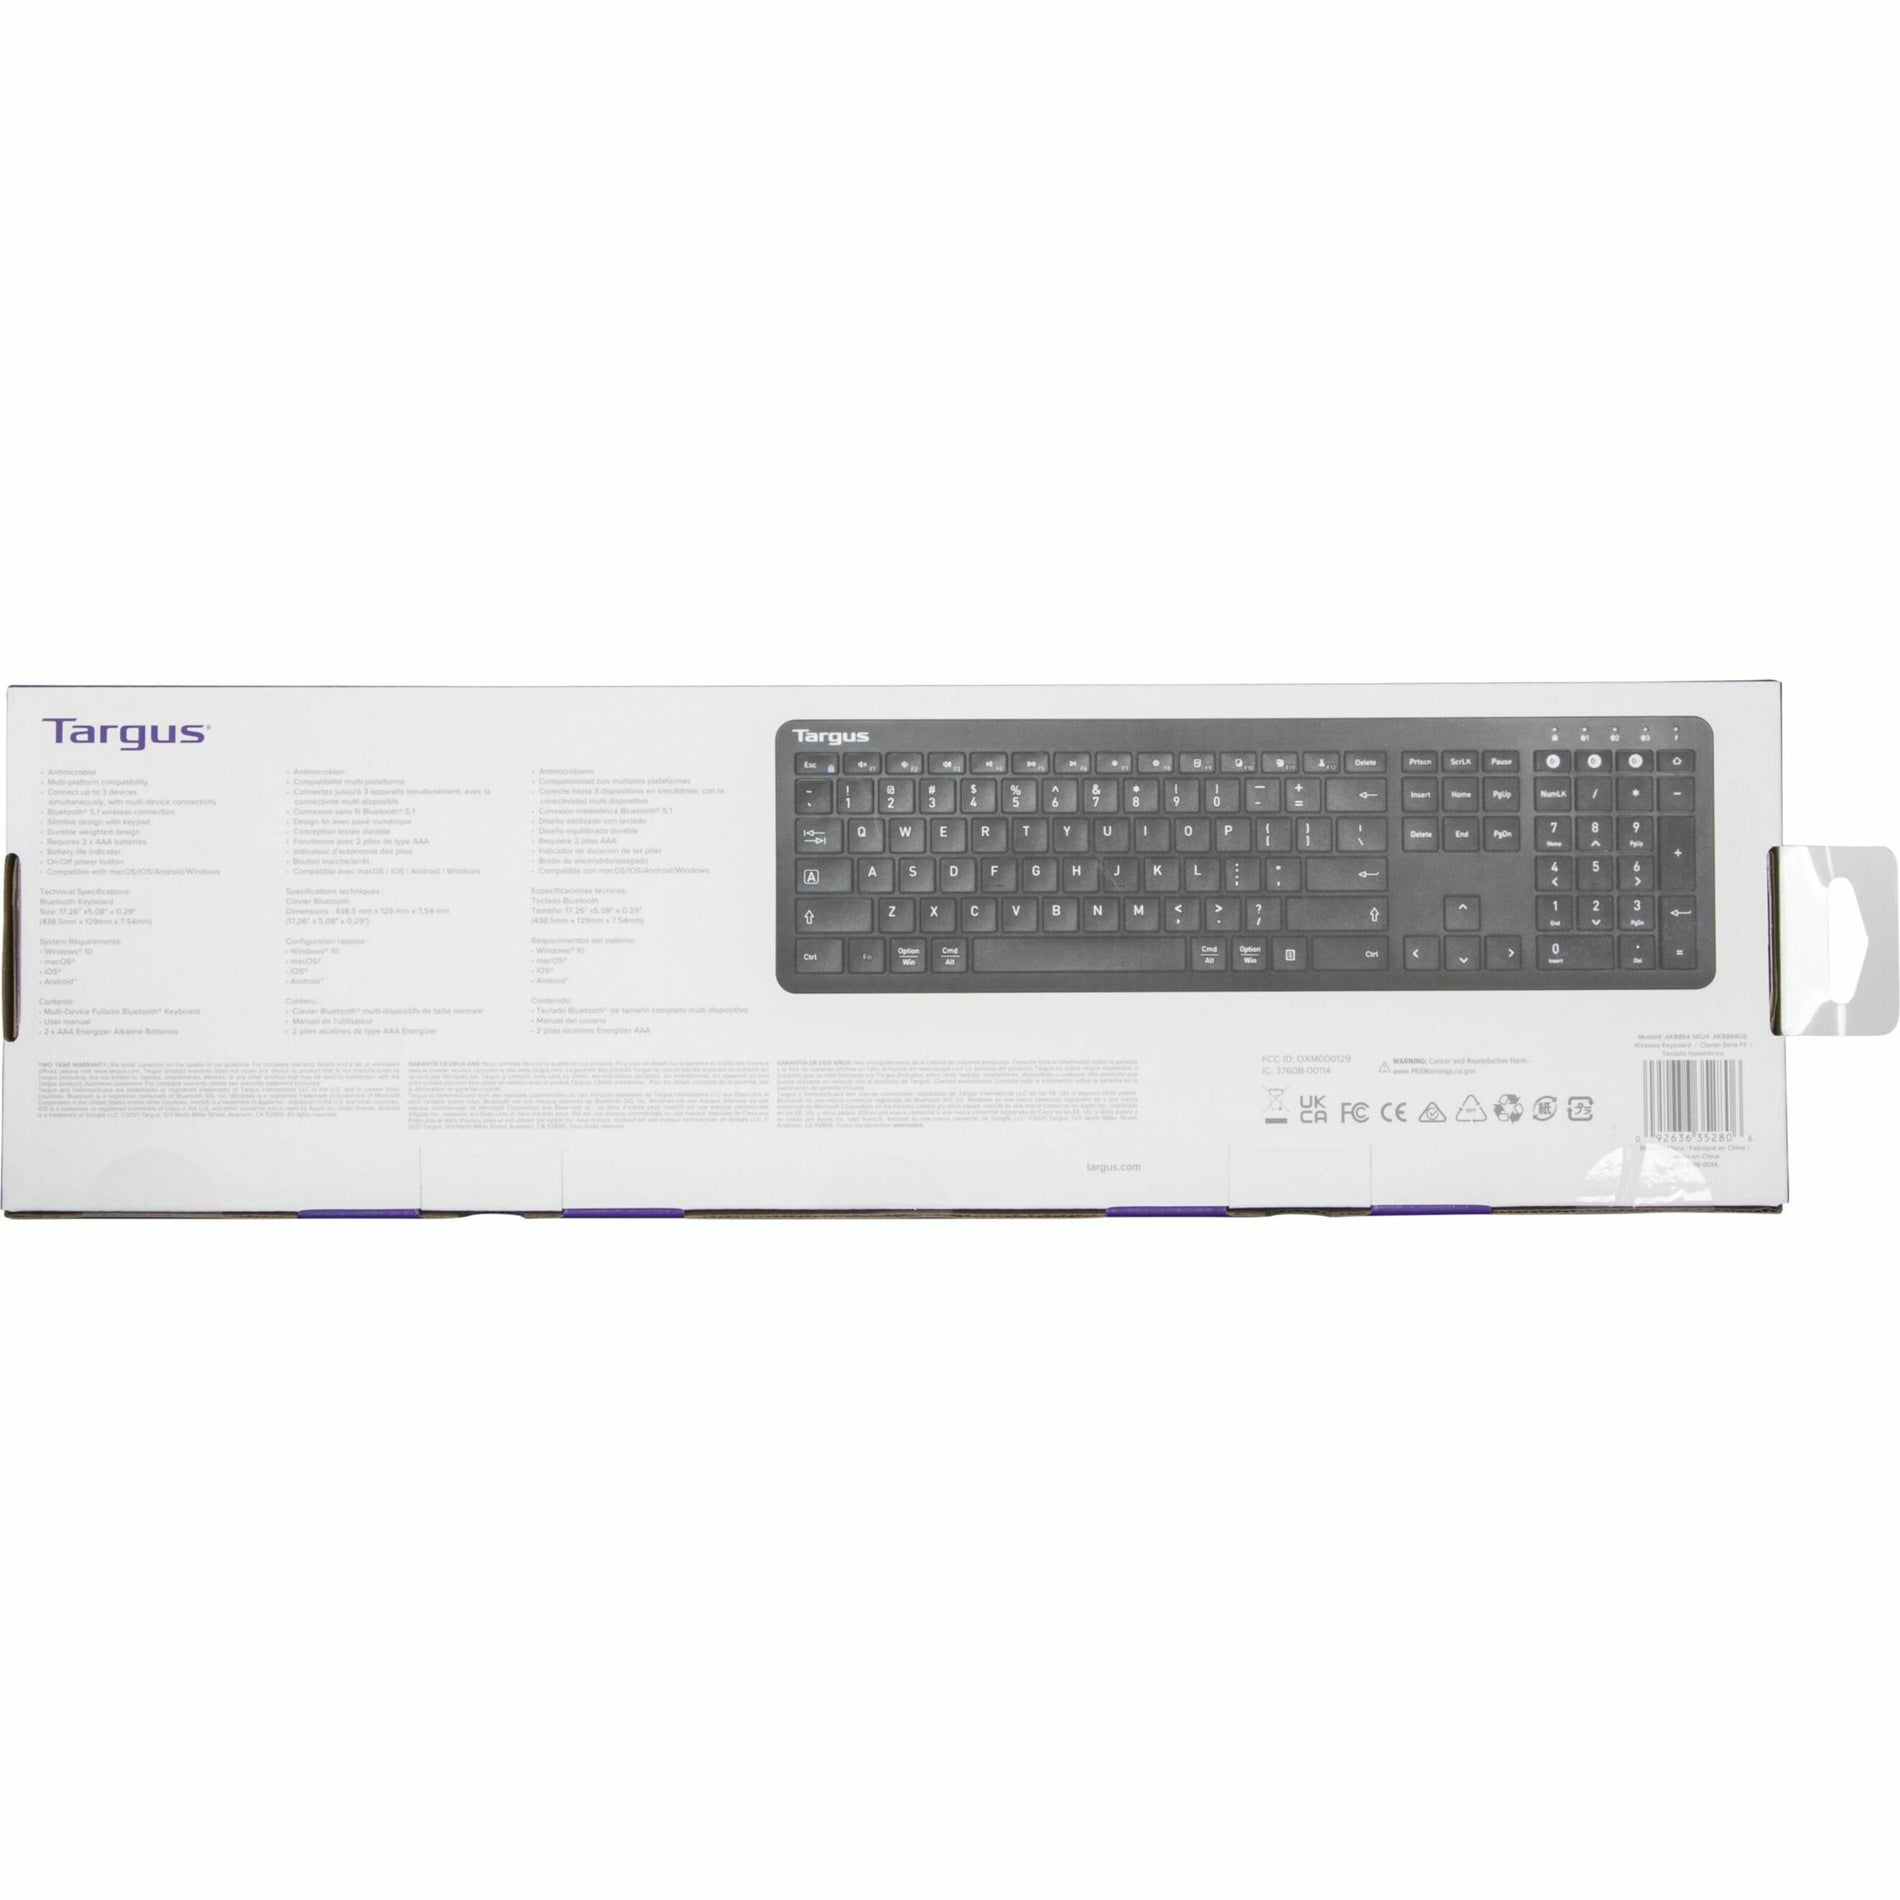 Targus AKB864US Full-Size Multi-Device Bluetooth Antimicrobial Keyboard, Black